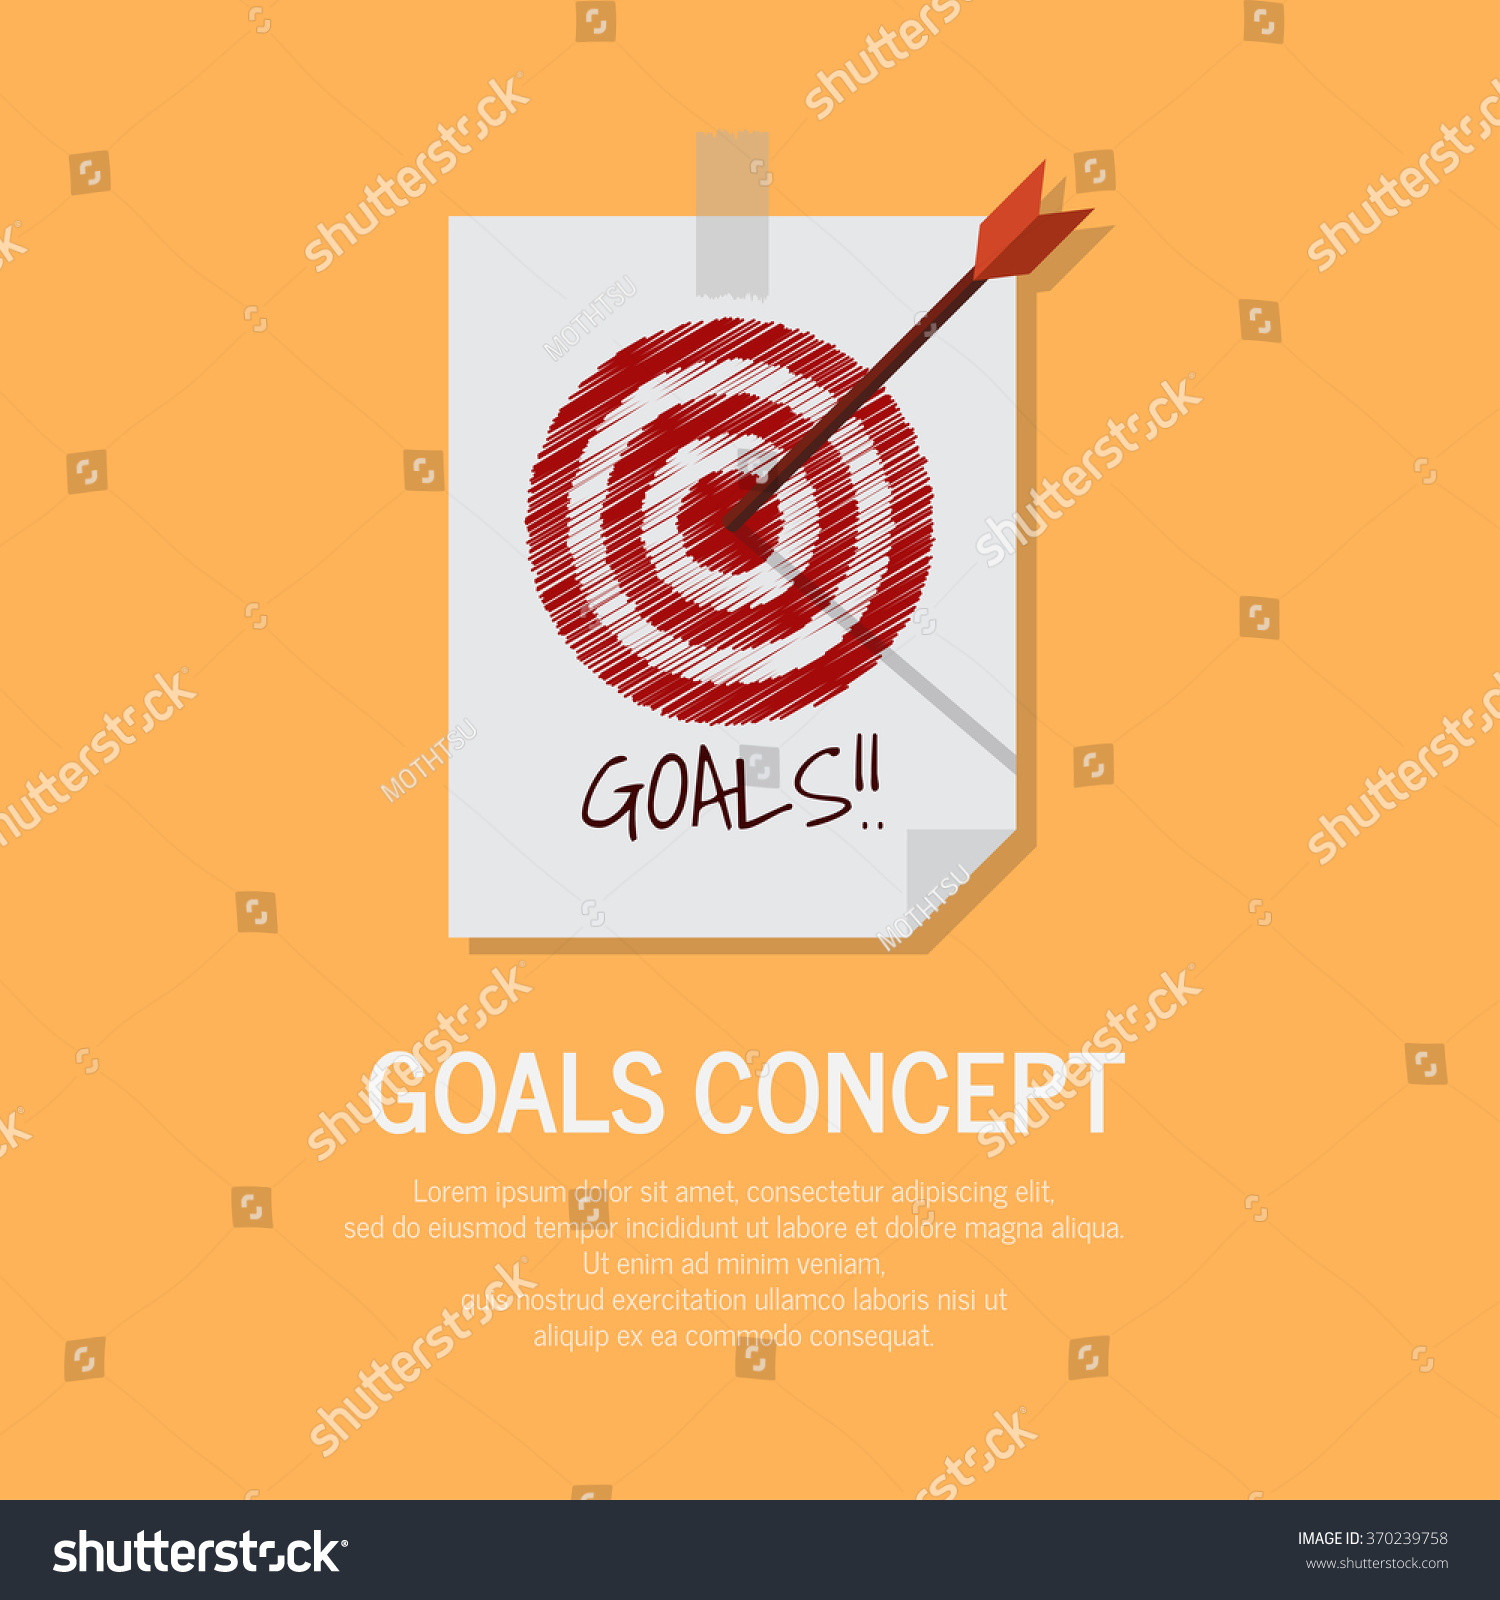 Goals concept paper with orange background #370239758